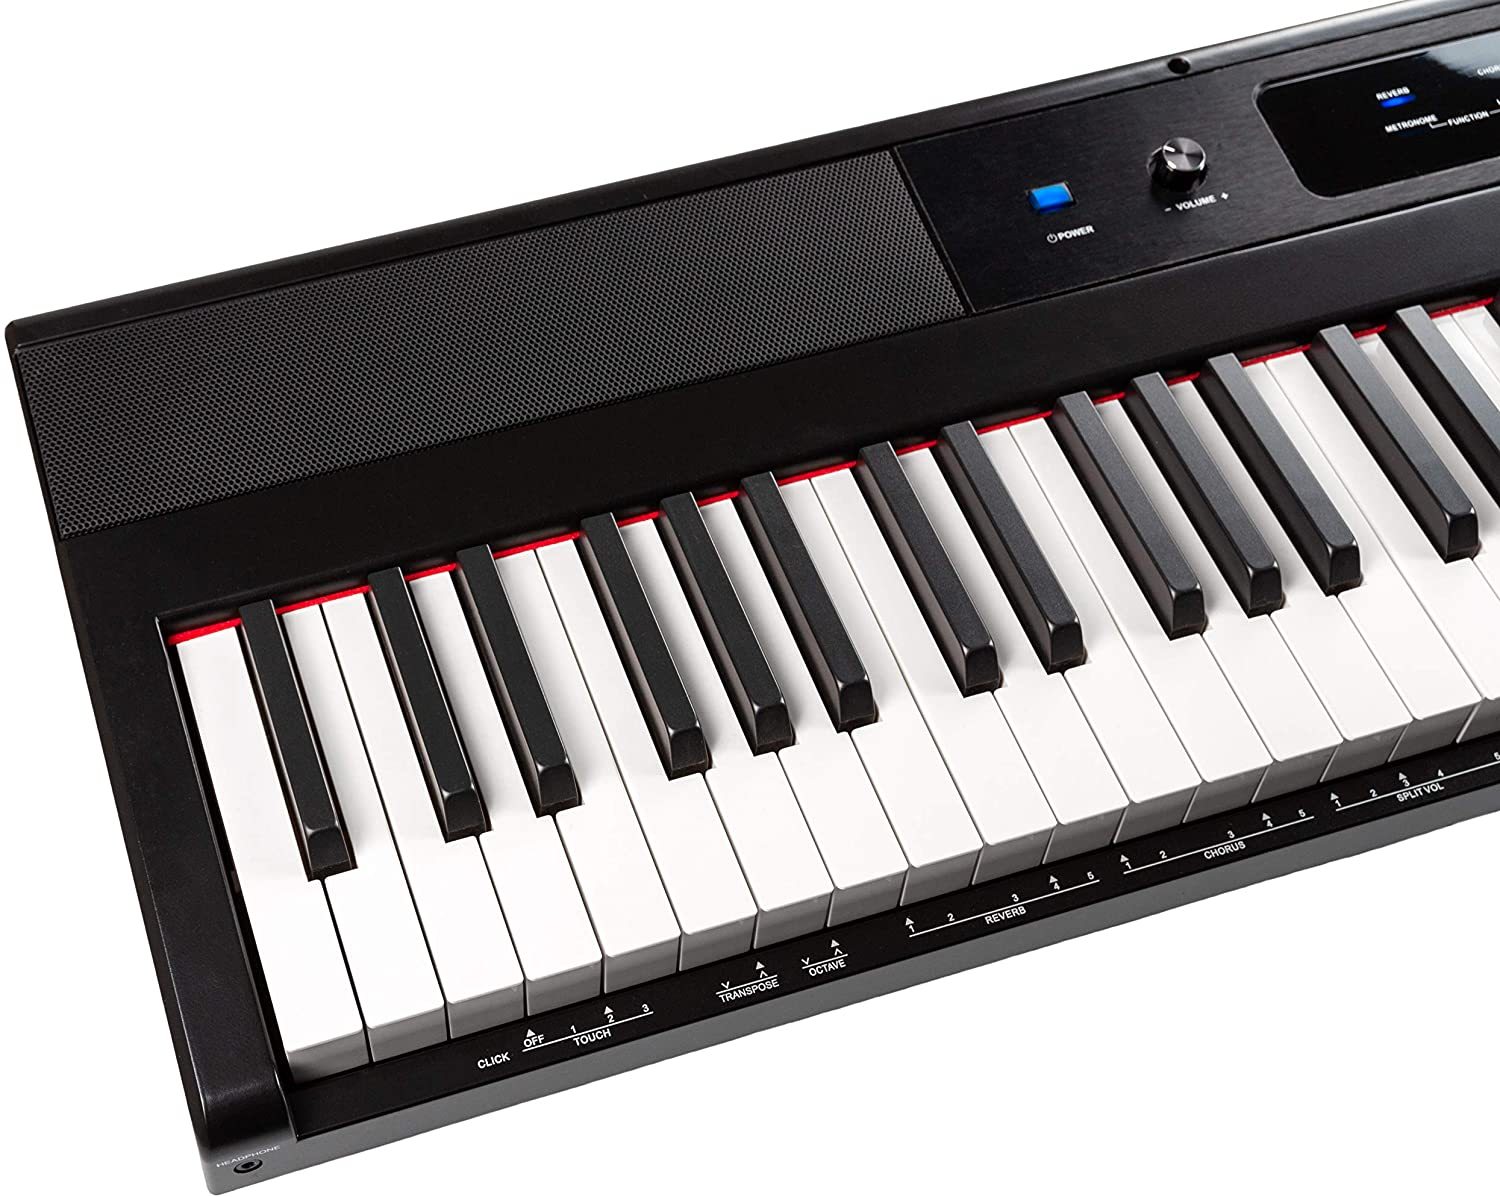 US$ 214.99 - RockJam 88-Key Beginner Digital Piano with ...